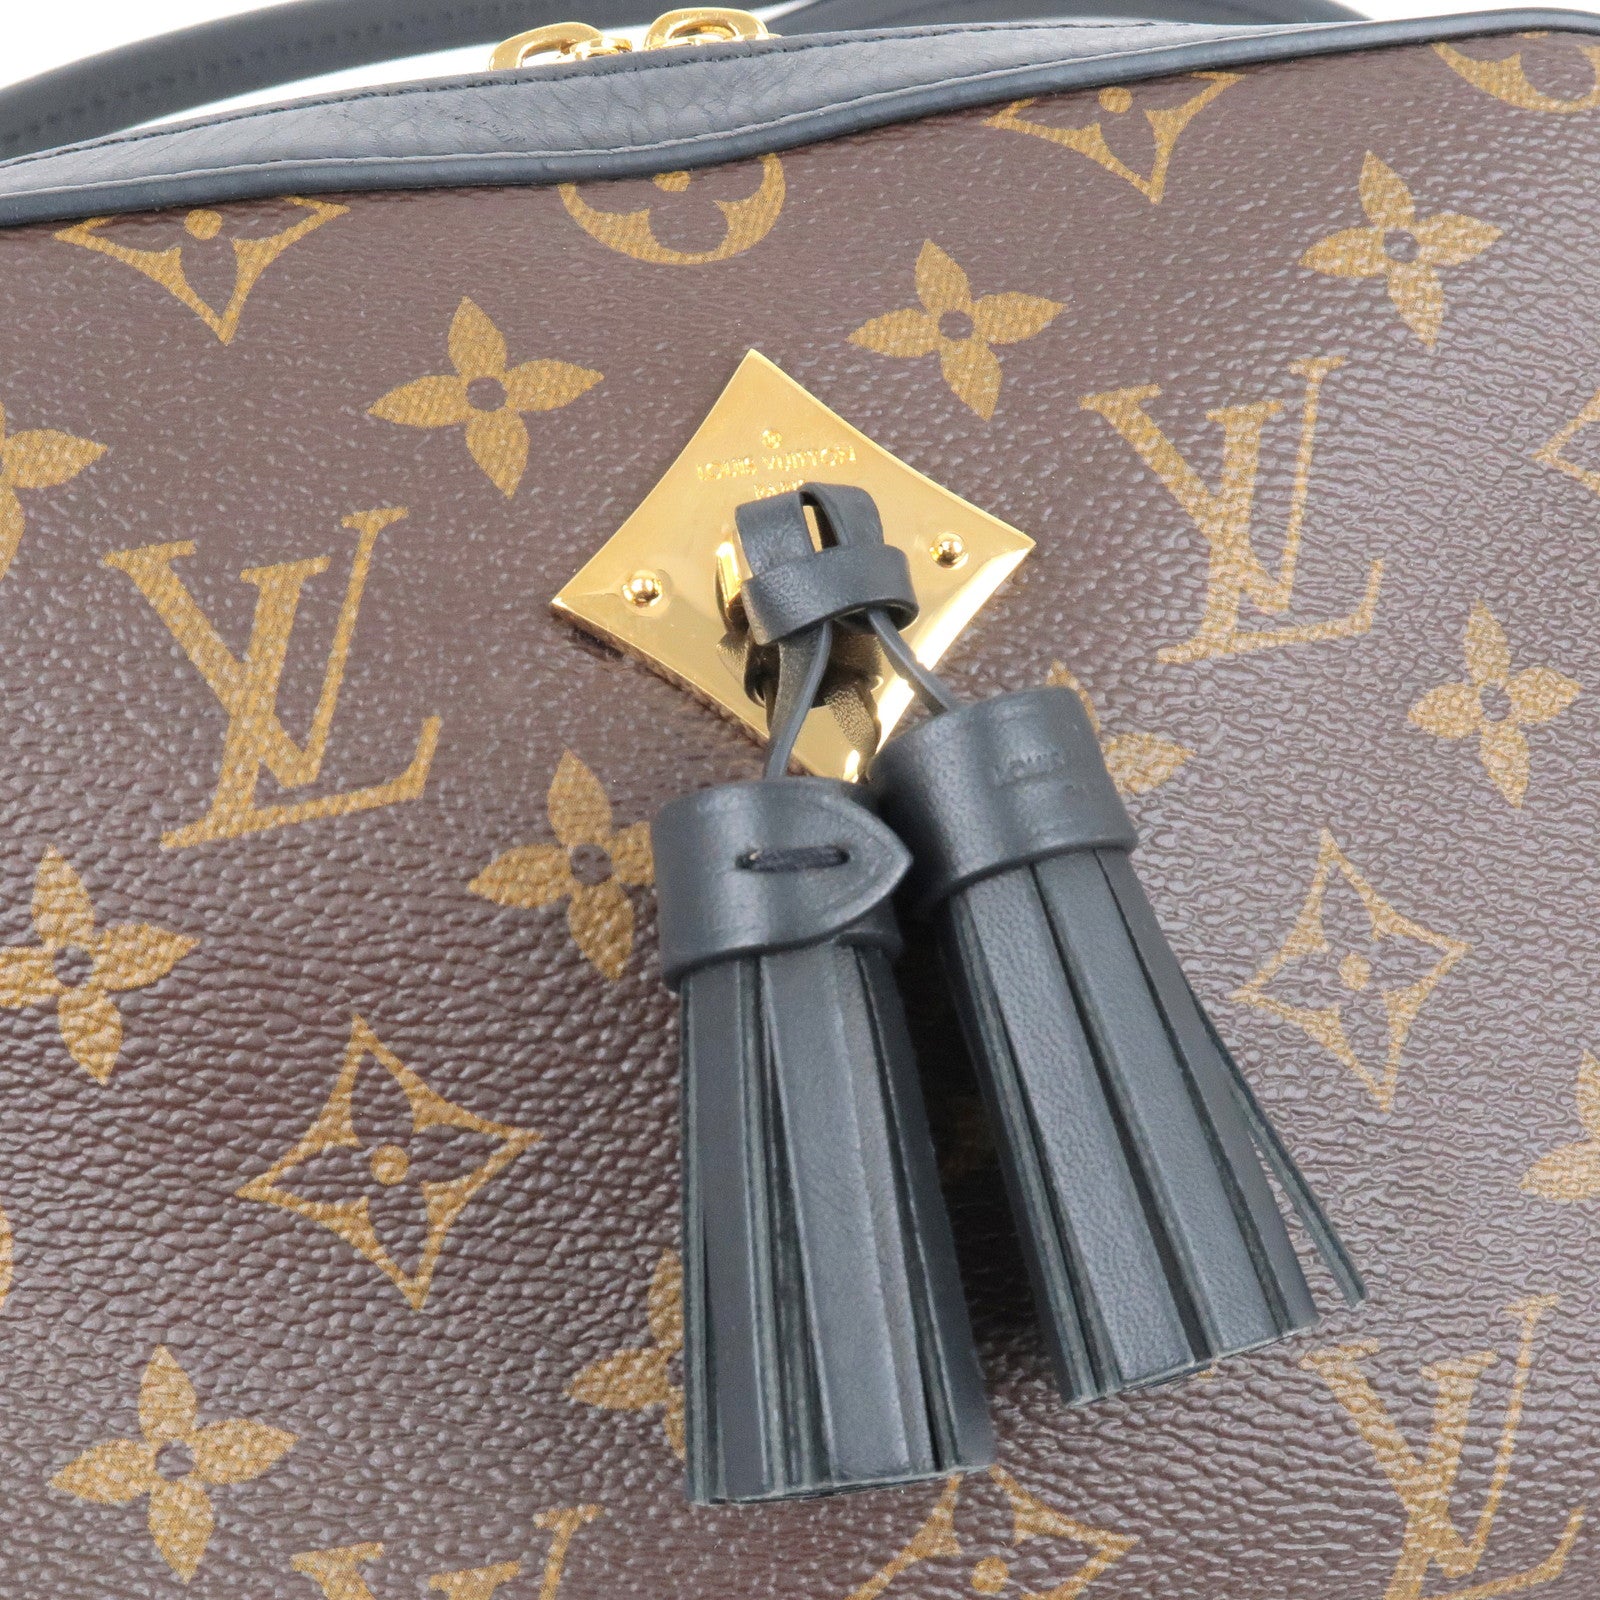 Louis Vuitton Saintonge crossbody bag Beige Dark brown Leather